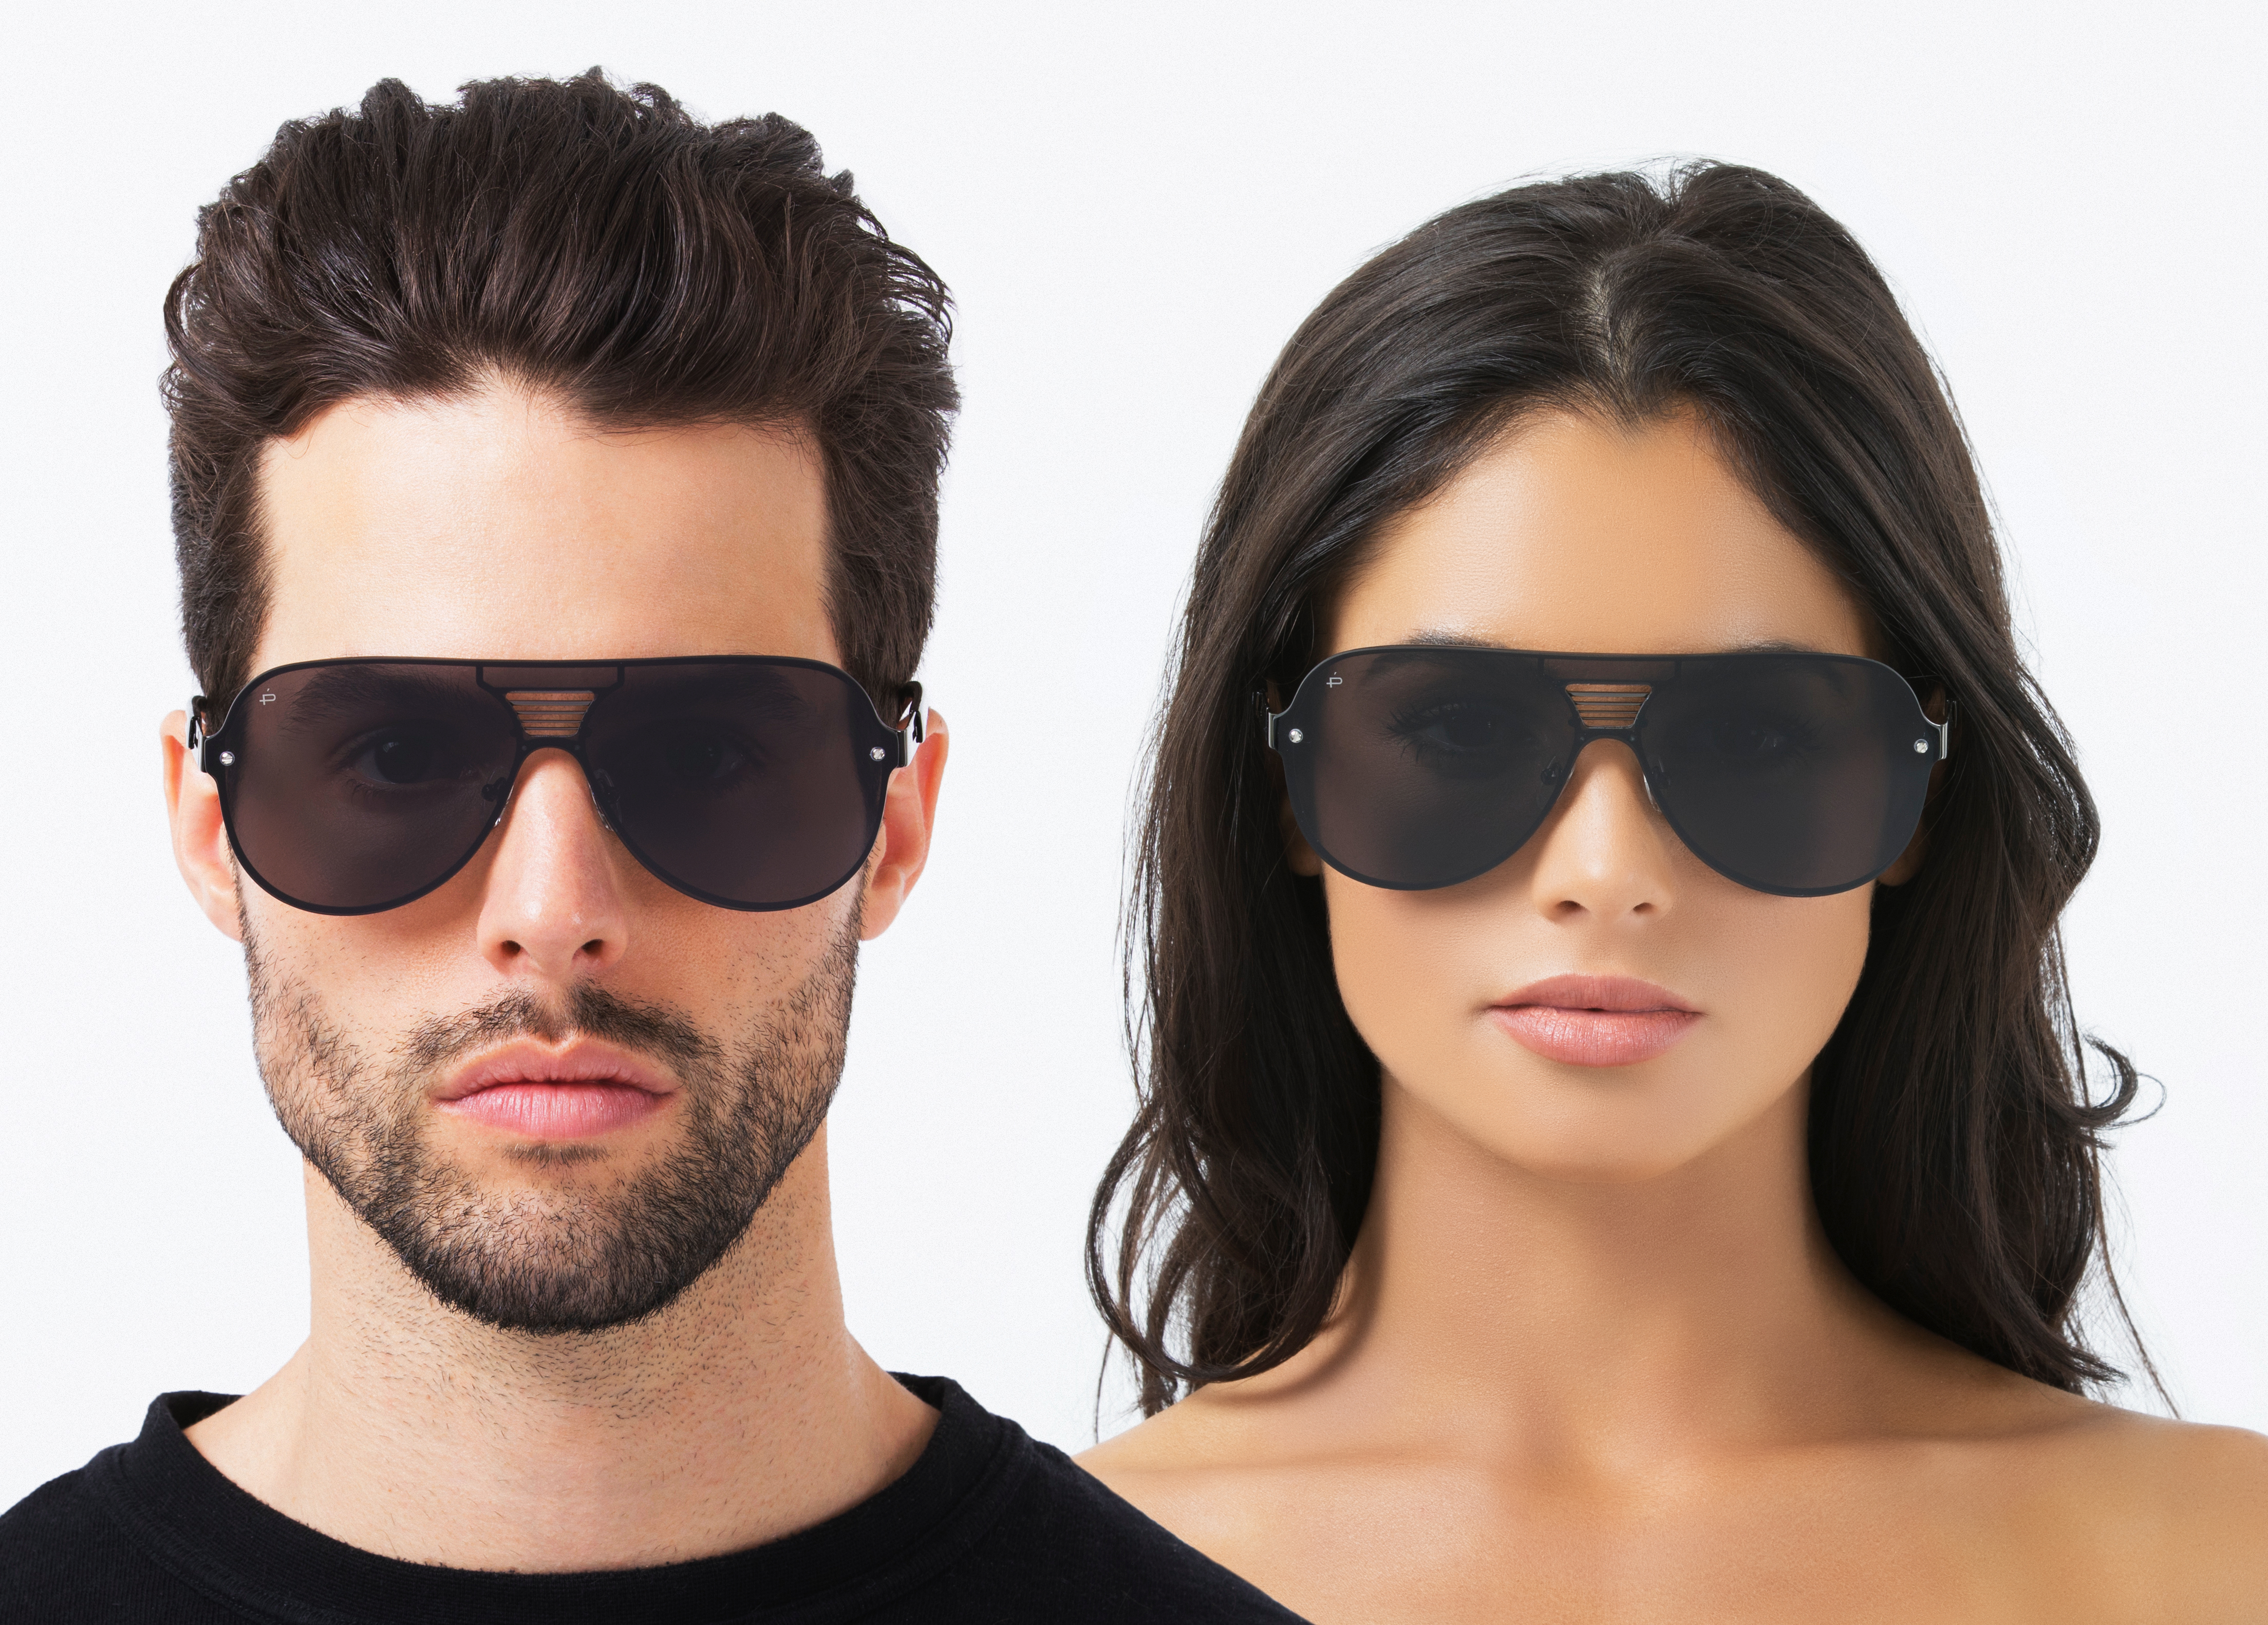 Unisex sunglasses. Prive Revaux очки. Очки солнцезащитные «Aviator». Солнцезащитные очки (унисекс). Солнцезащитные очки мужские и женские.